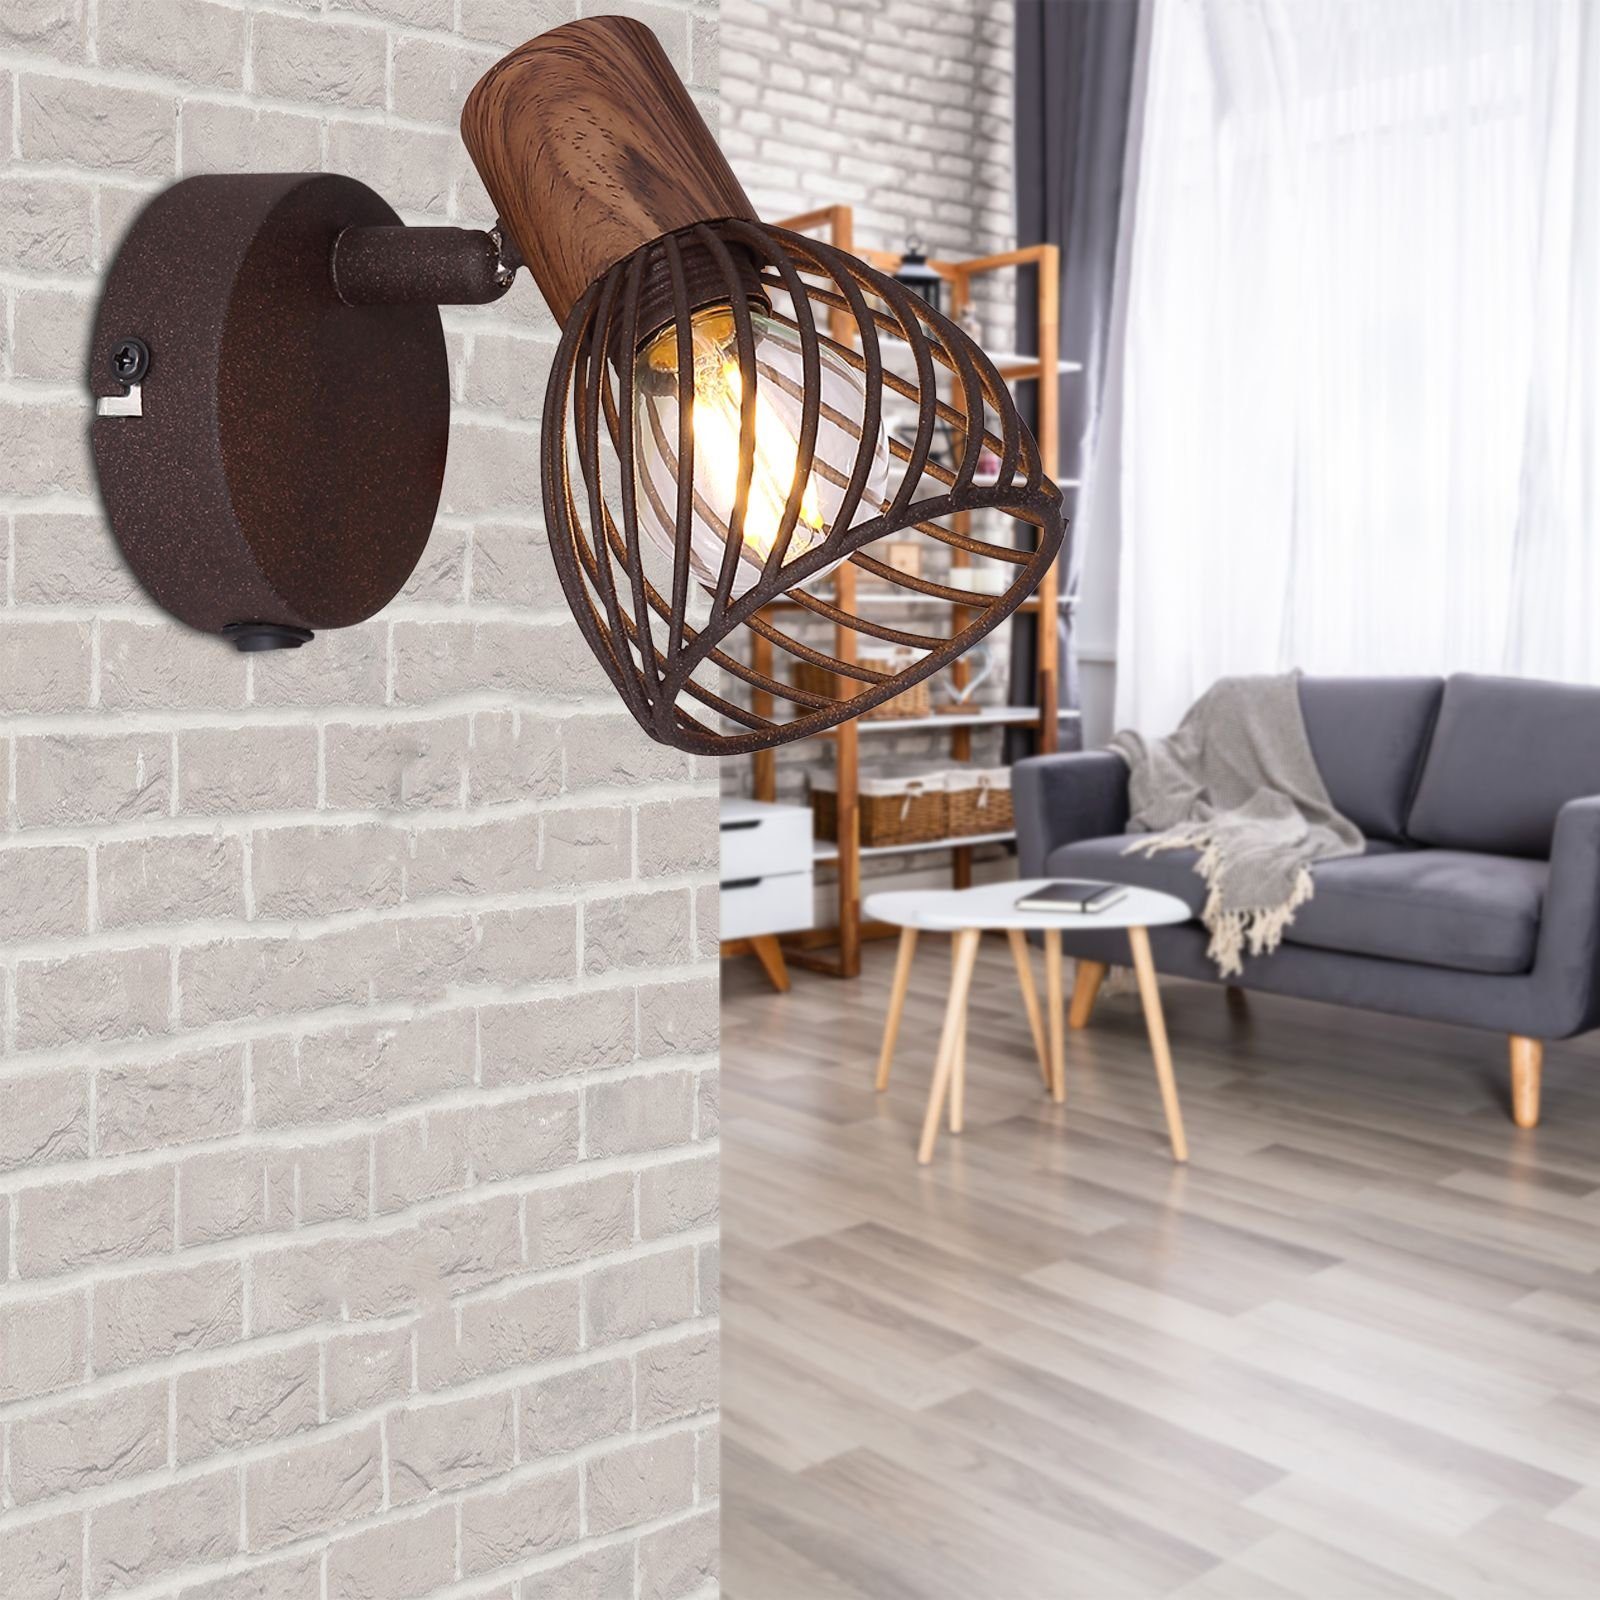 Wandstrahler Holz mit GLOBO Globo Schalter Innen Wandleuchte Wandlampe Wandleuchte